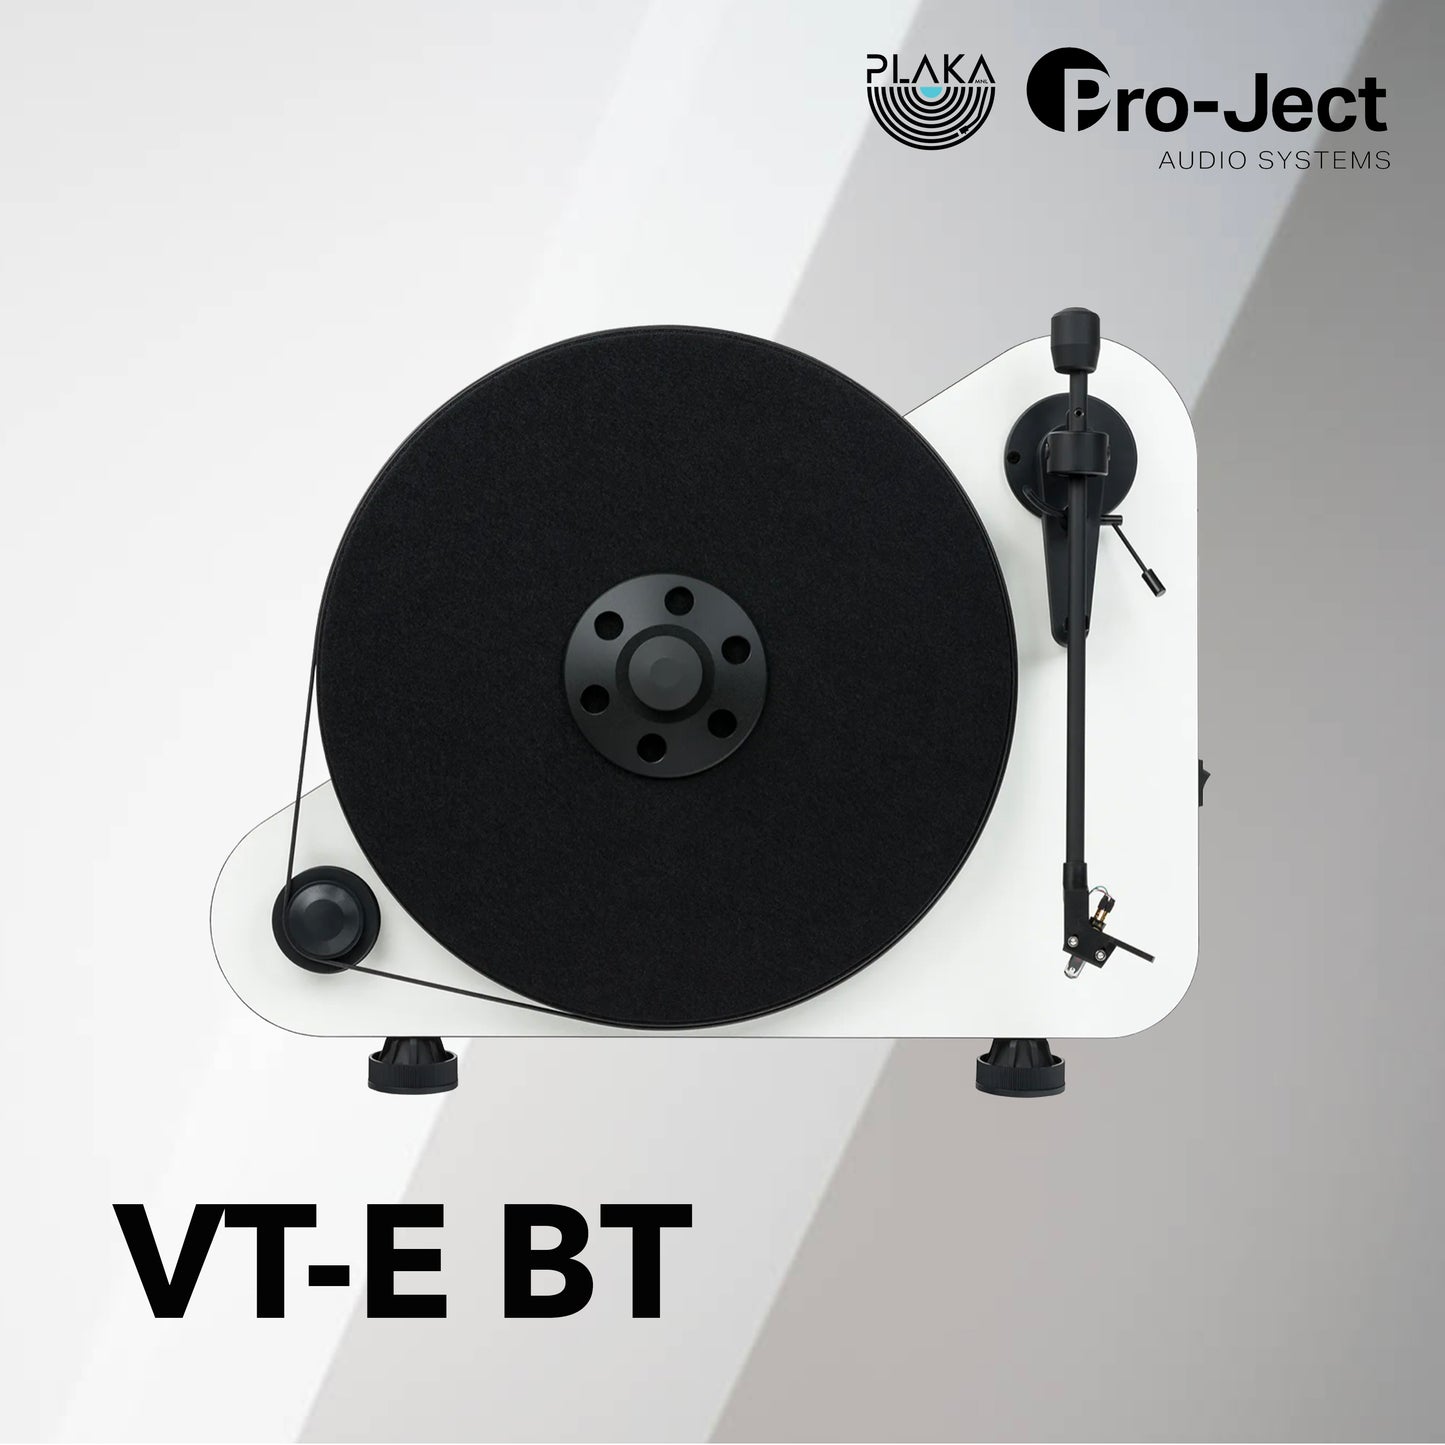 Pro-ject VT-E BT Turntable